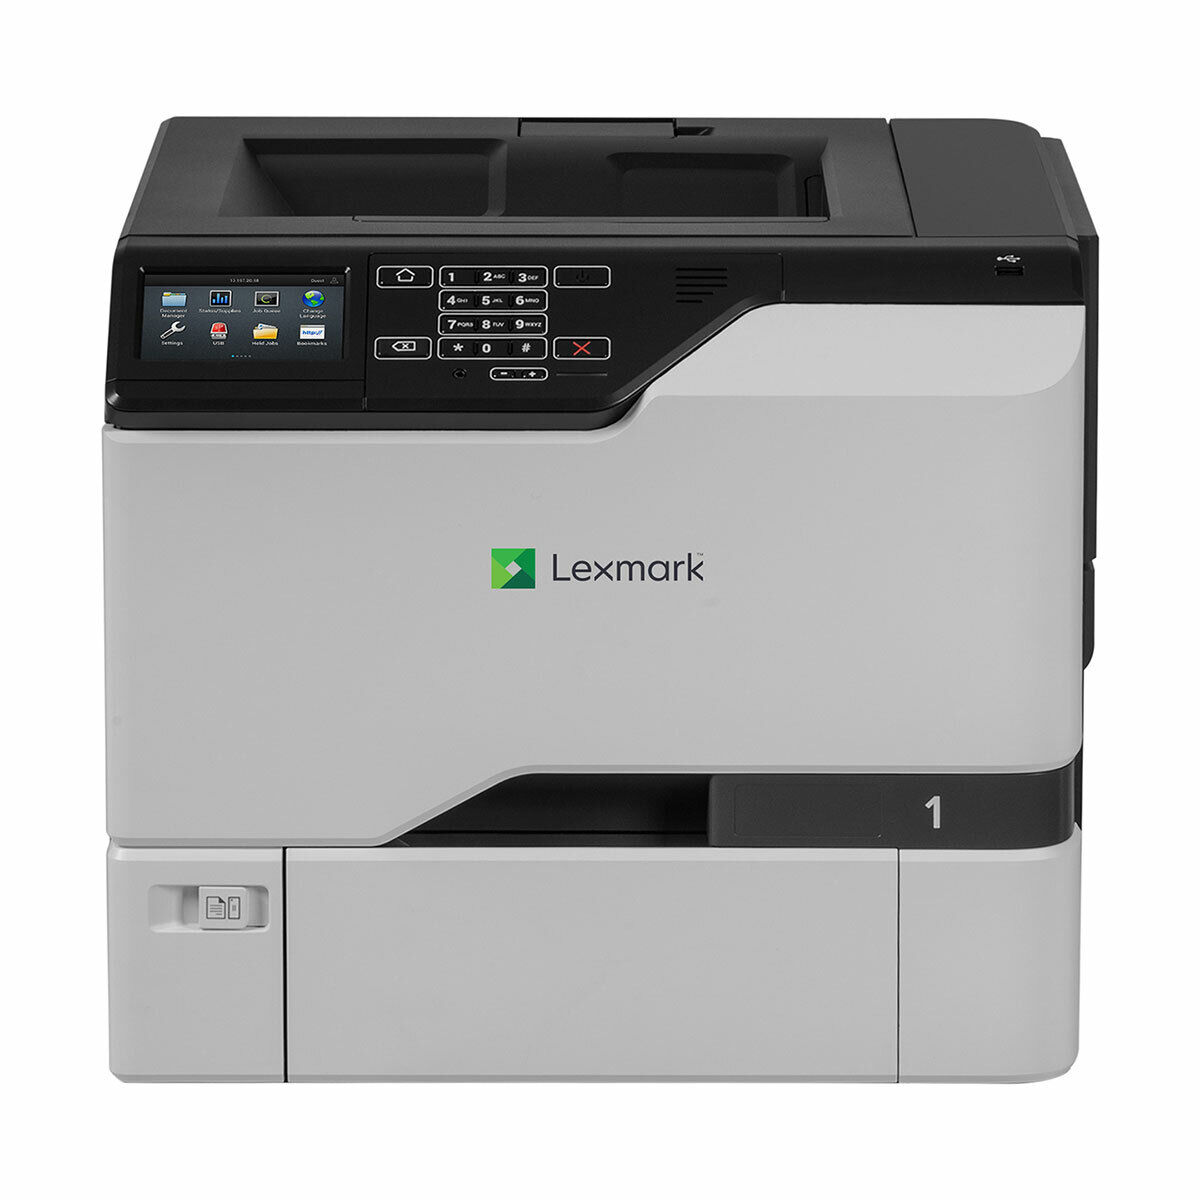 Lexmark C4150 Color Laser Printer 40C9054 Low pages w/toner 30K pages